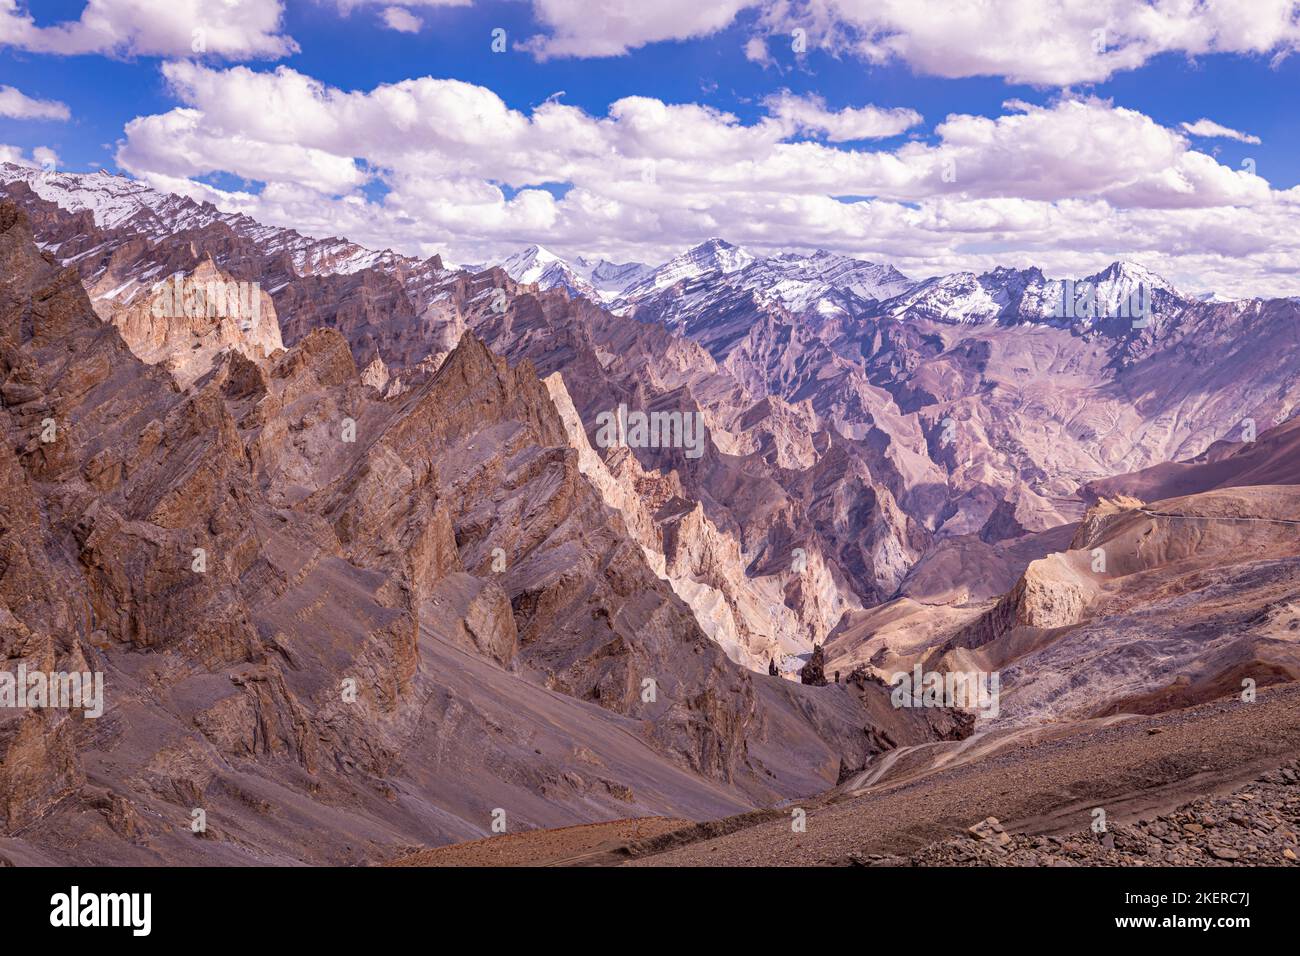 Landscape in the area of Photoksar, Ladakh, India Stock Photo